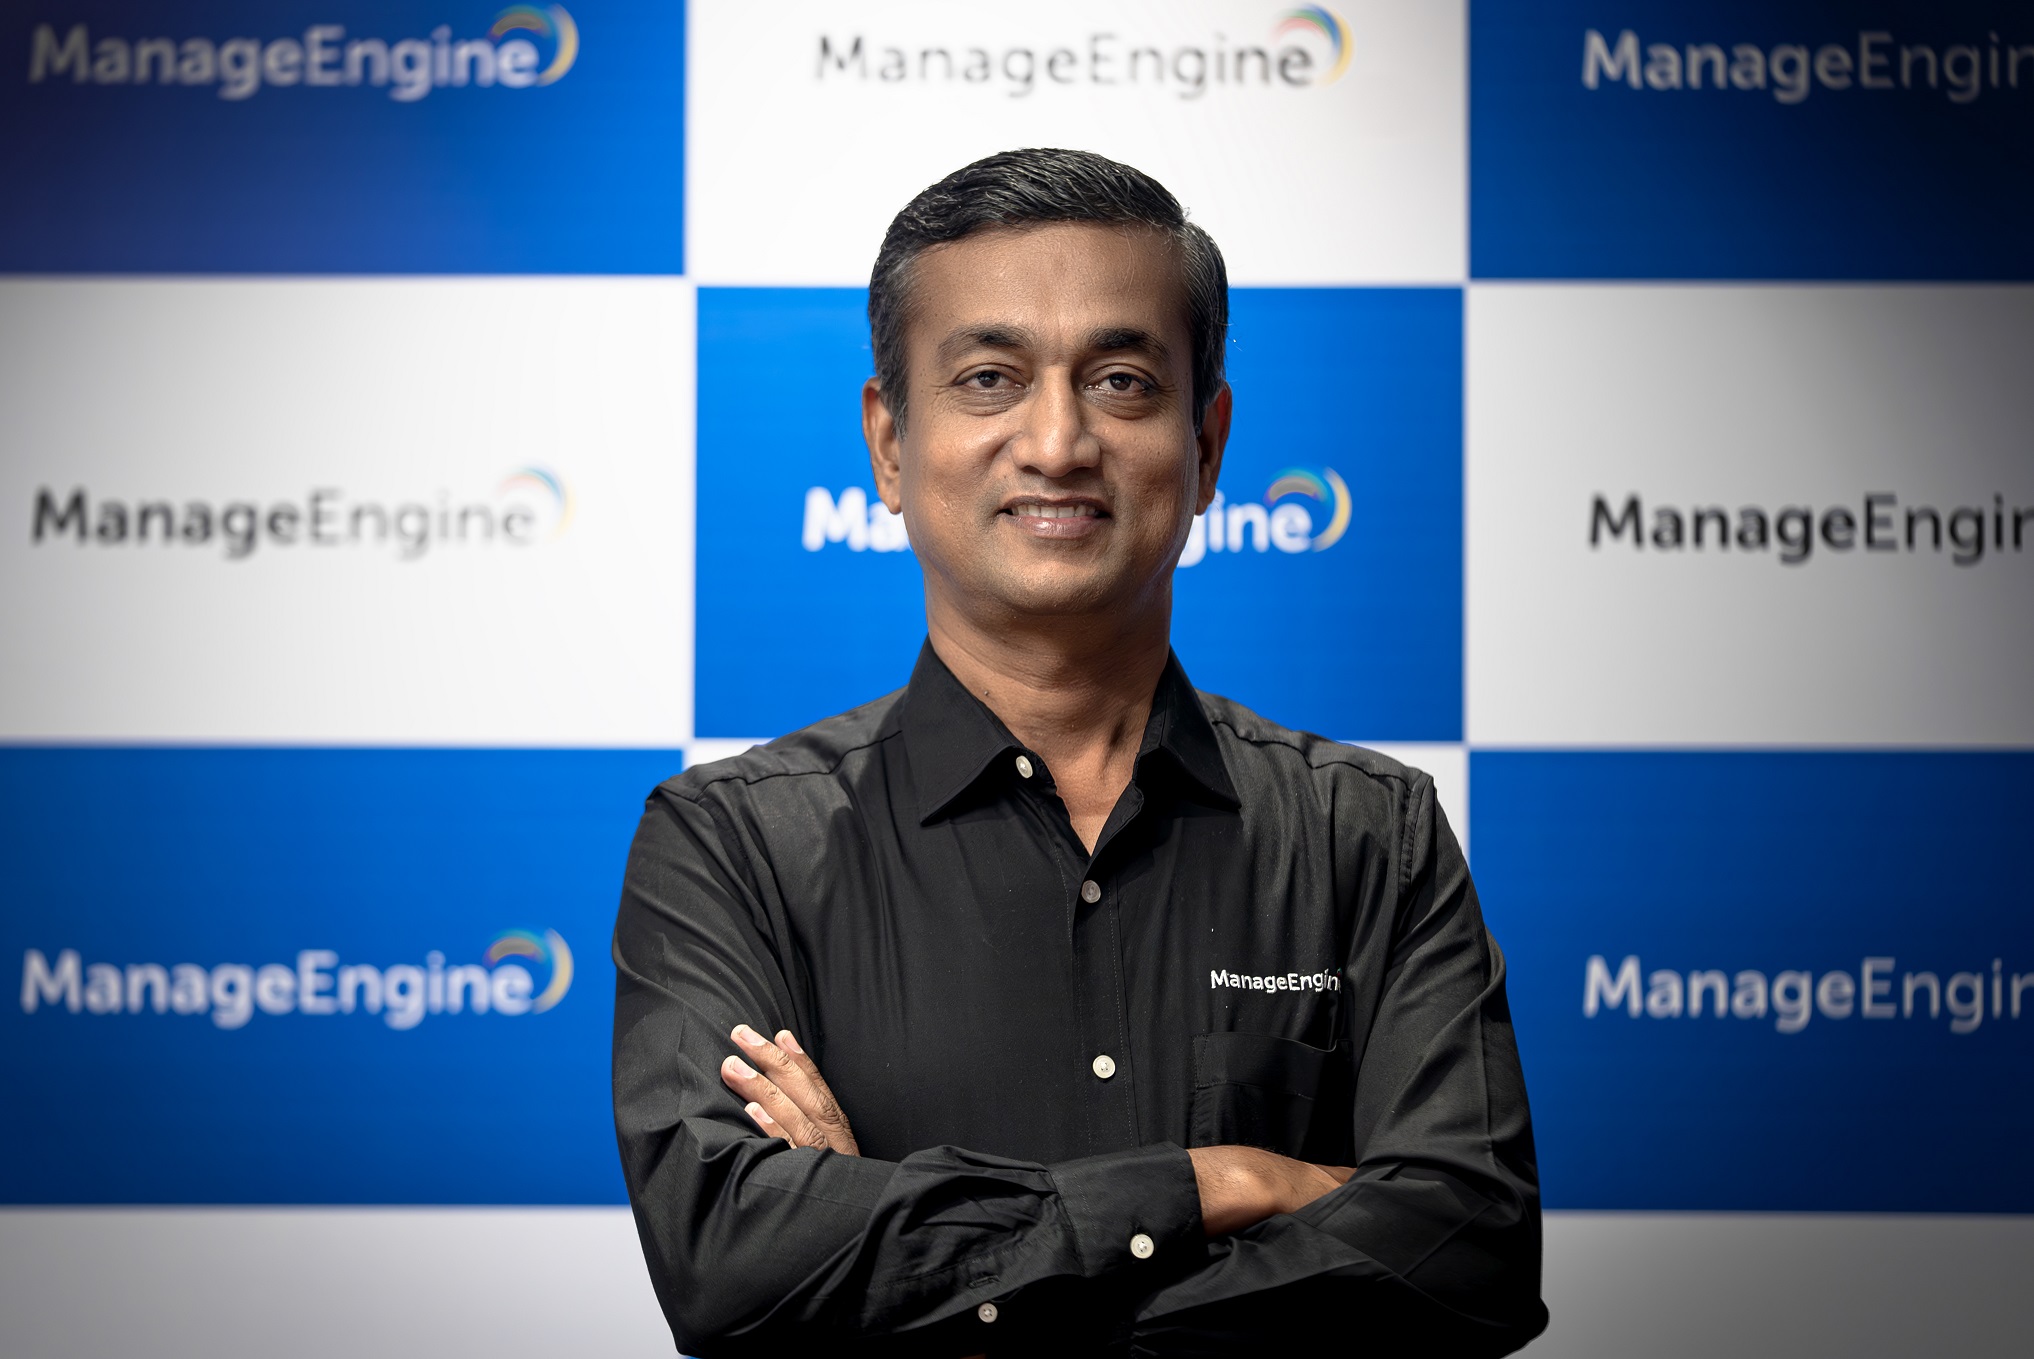 ManageEngine vice president Mathivanan Venkatachalam